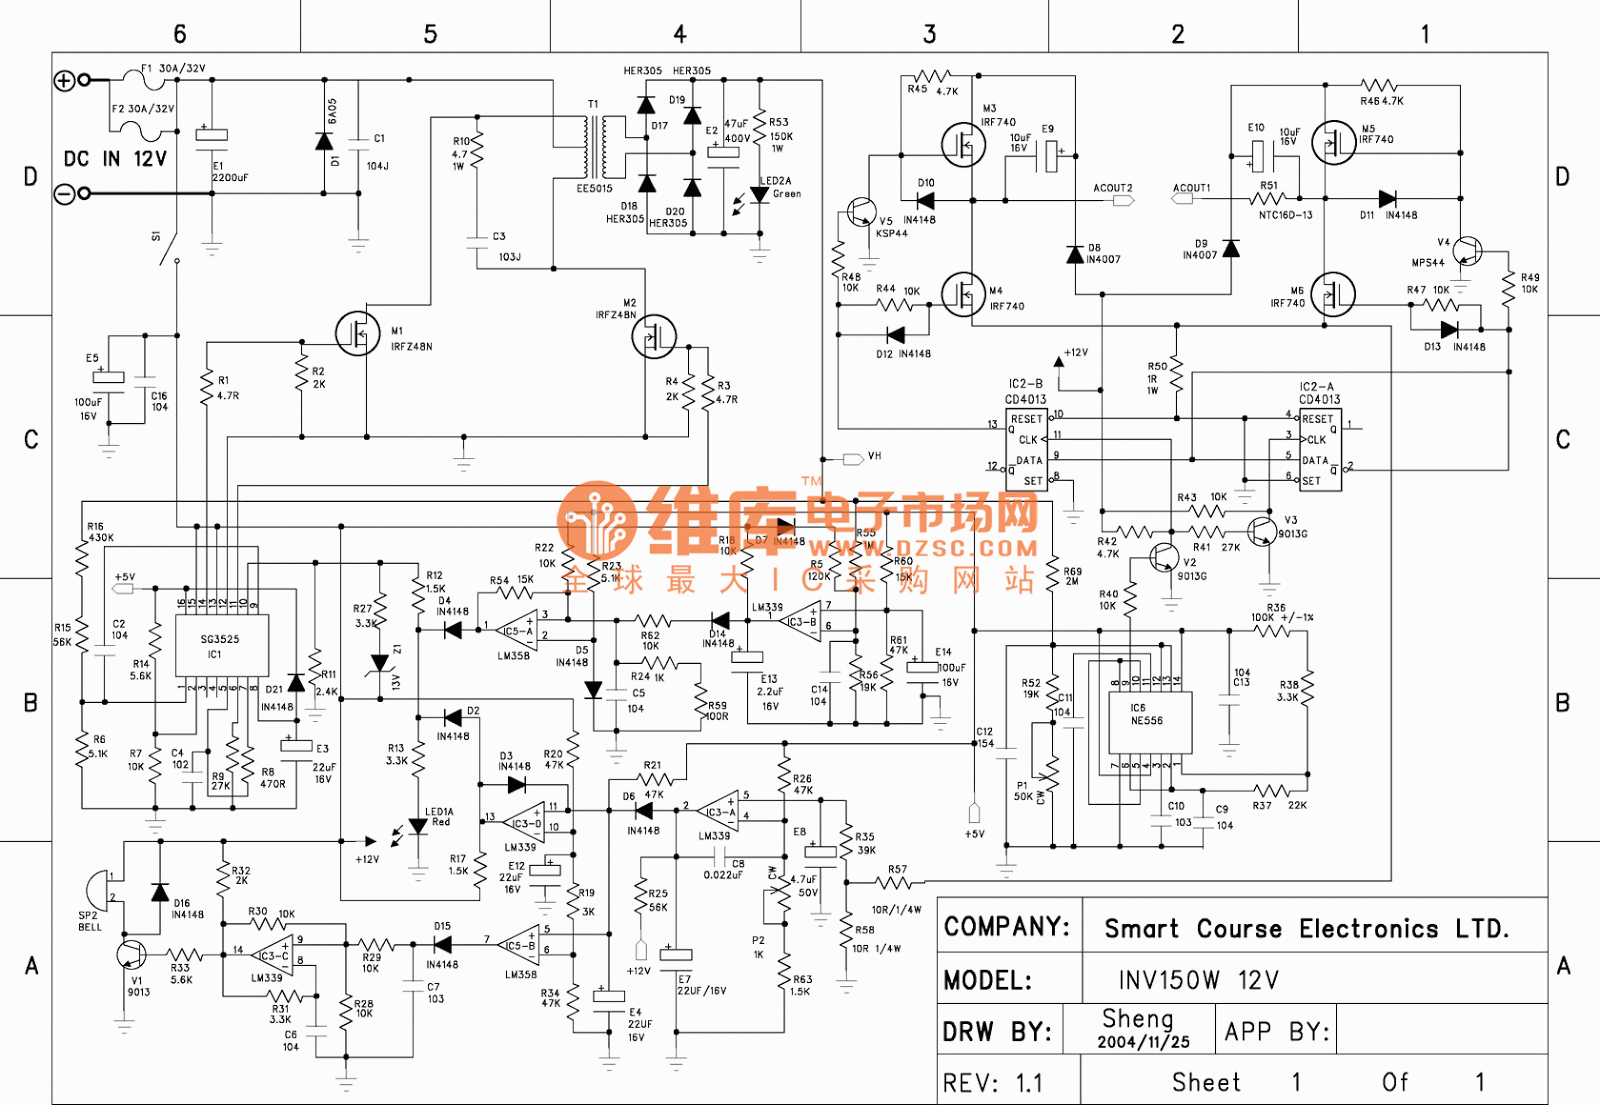 Schematics Diagrams  Dc Ac Inverter 150w 12v To 220v